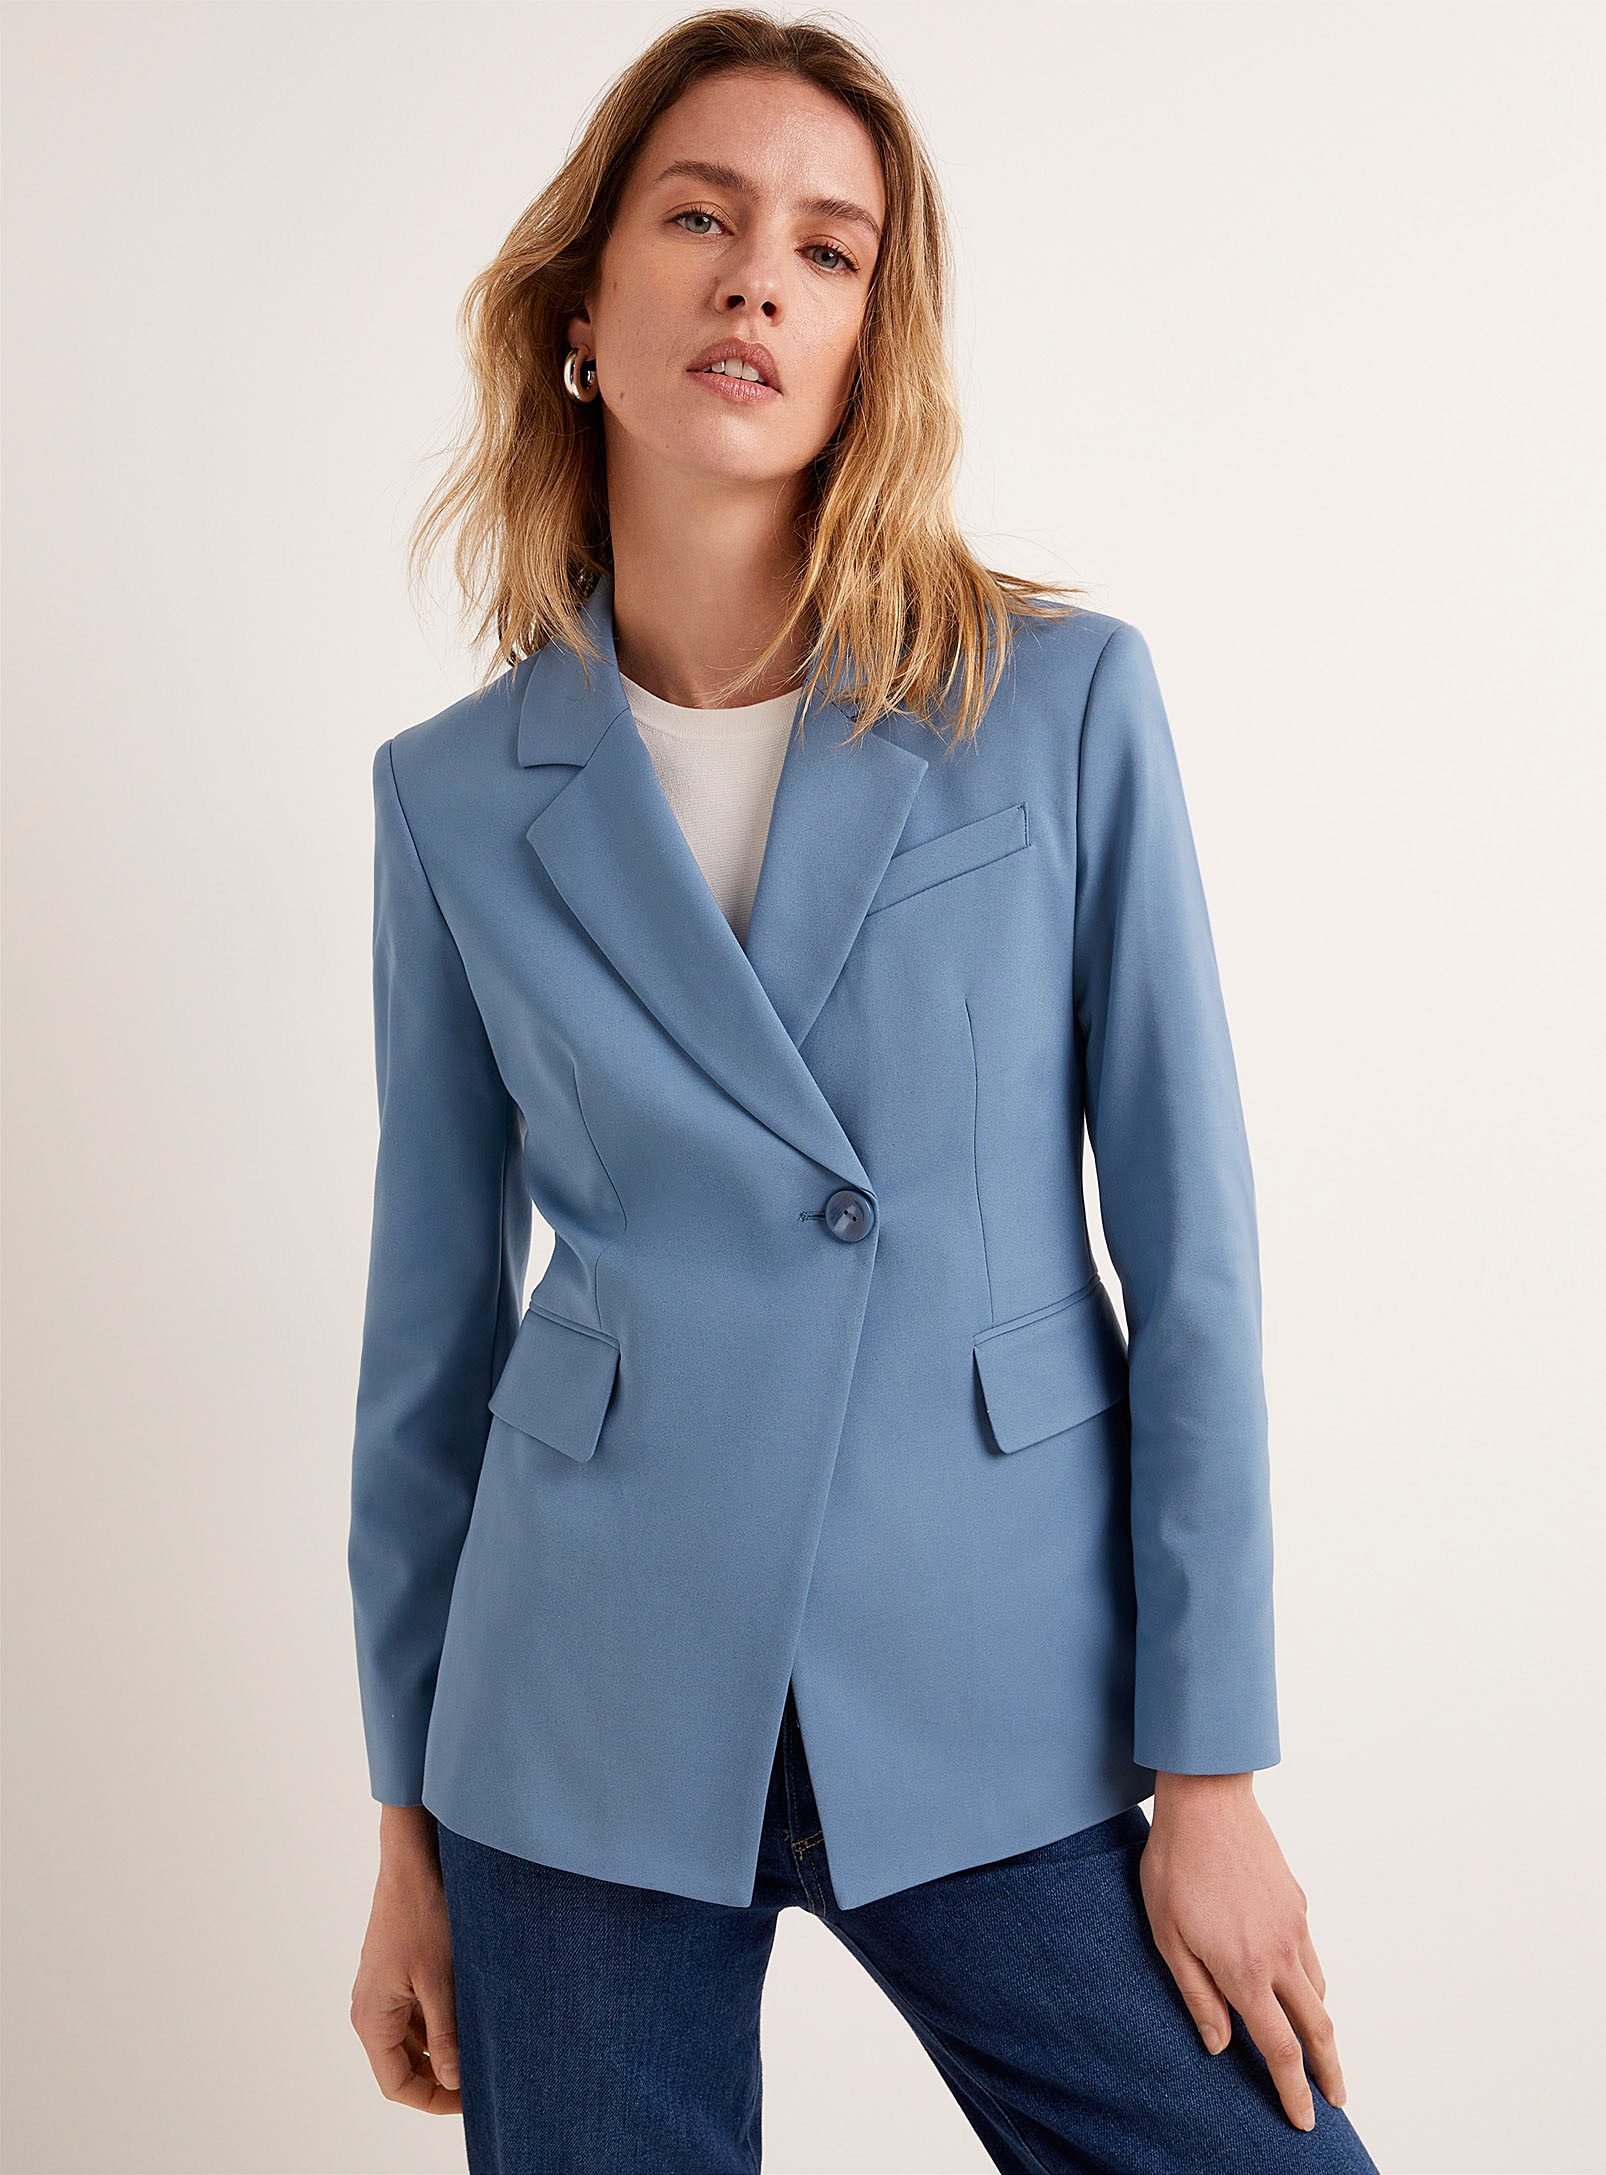 Sisley - Women's ST-Shirtl blue structured Blazer Jacket